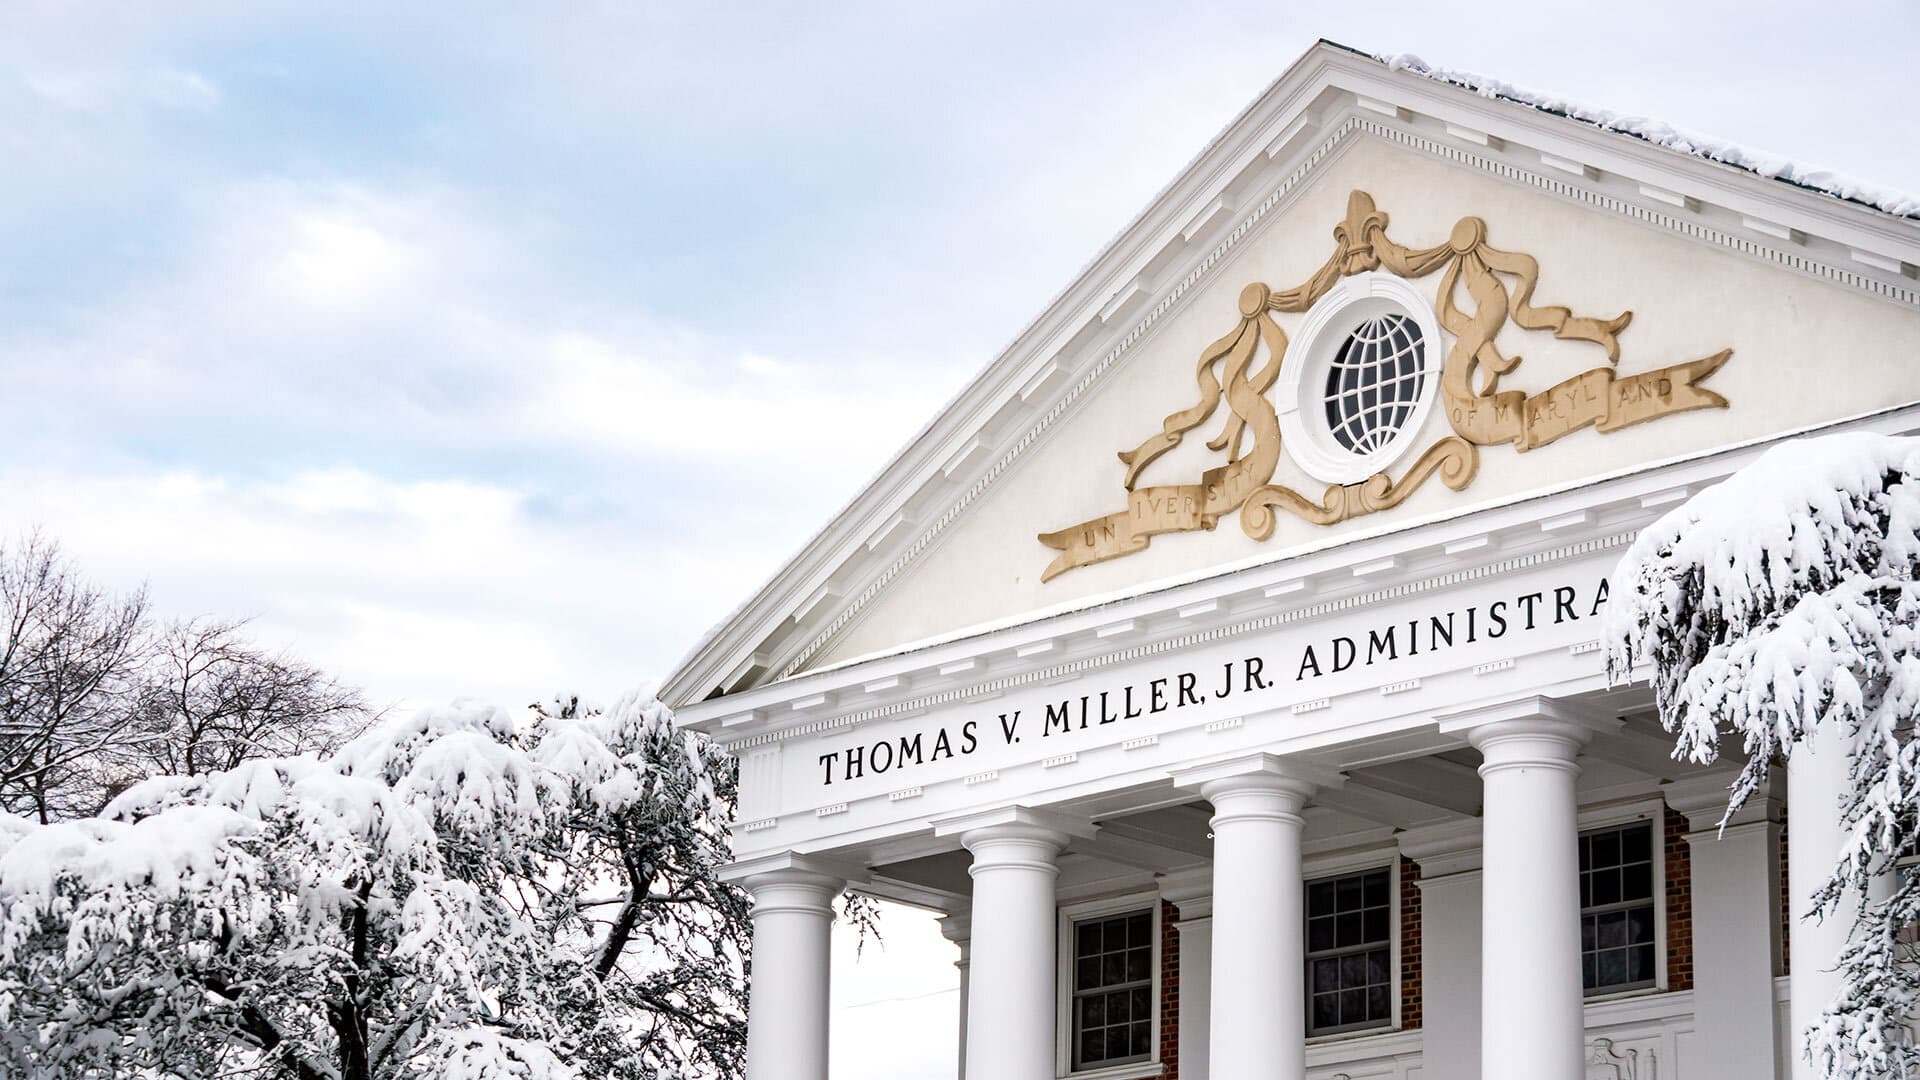 Snow-covered Thomas V. Miller, Jr. Administration building